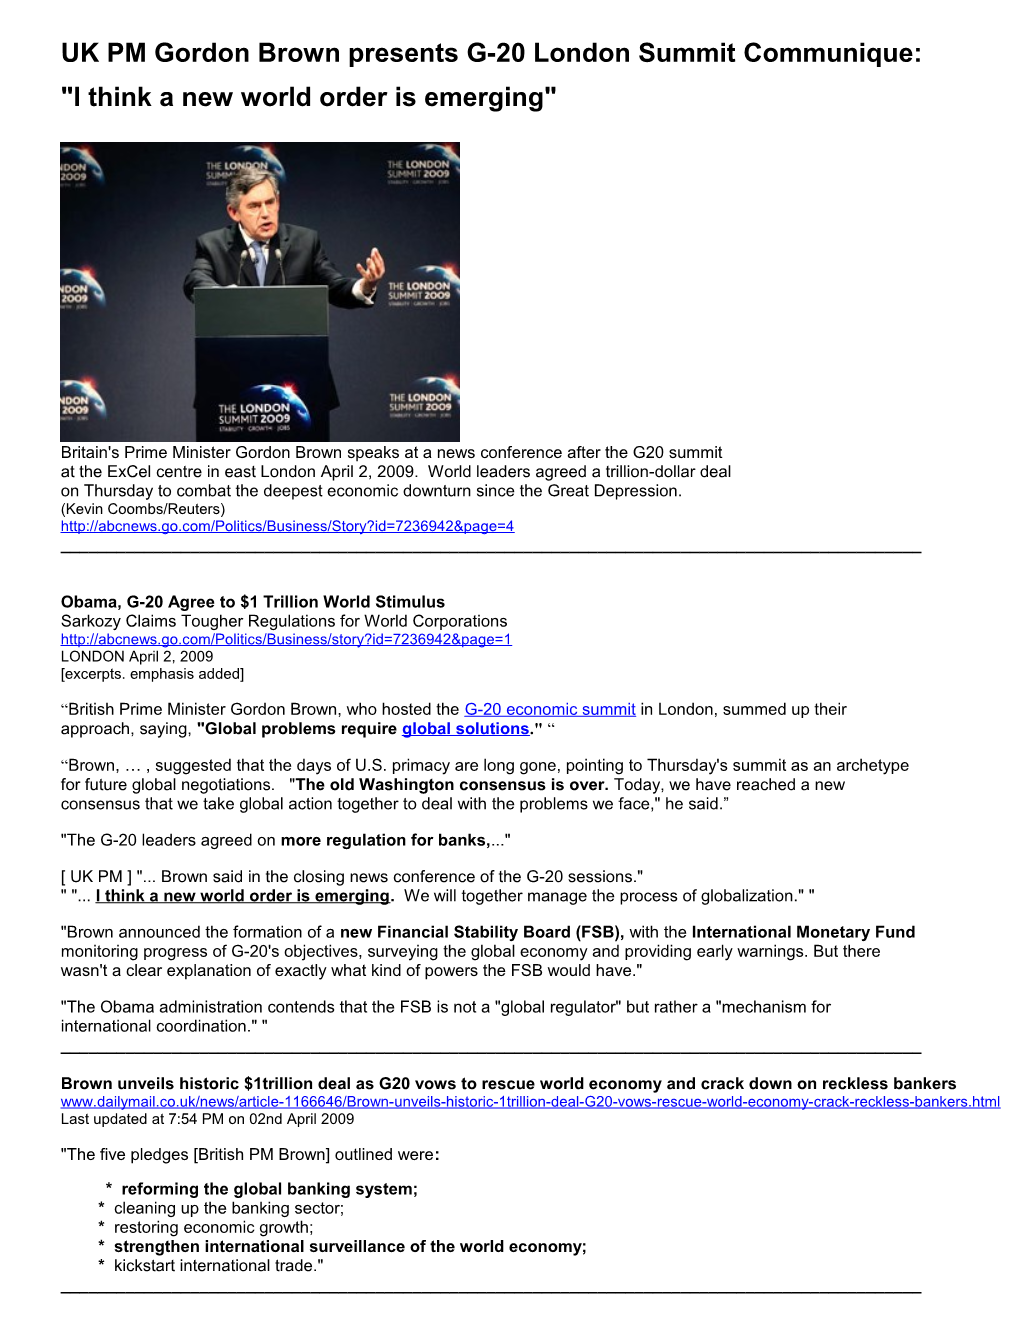 UK PM Gordon Brown Presents G-20 London Summit Communique